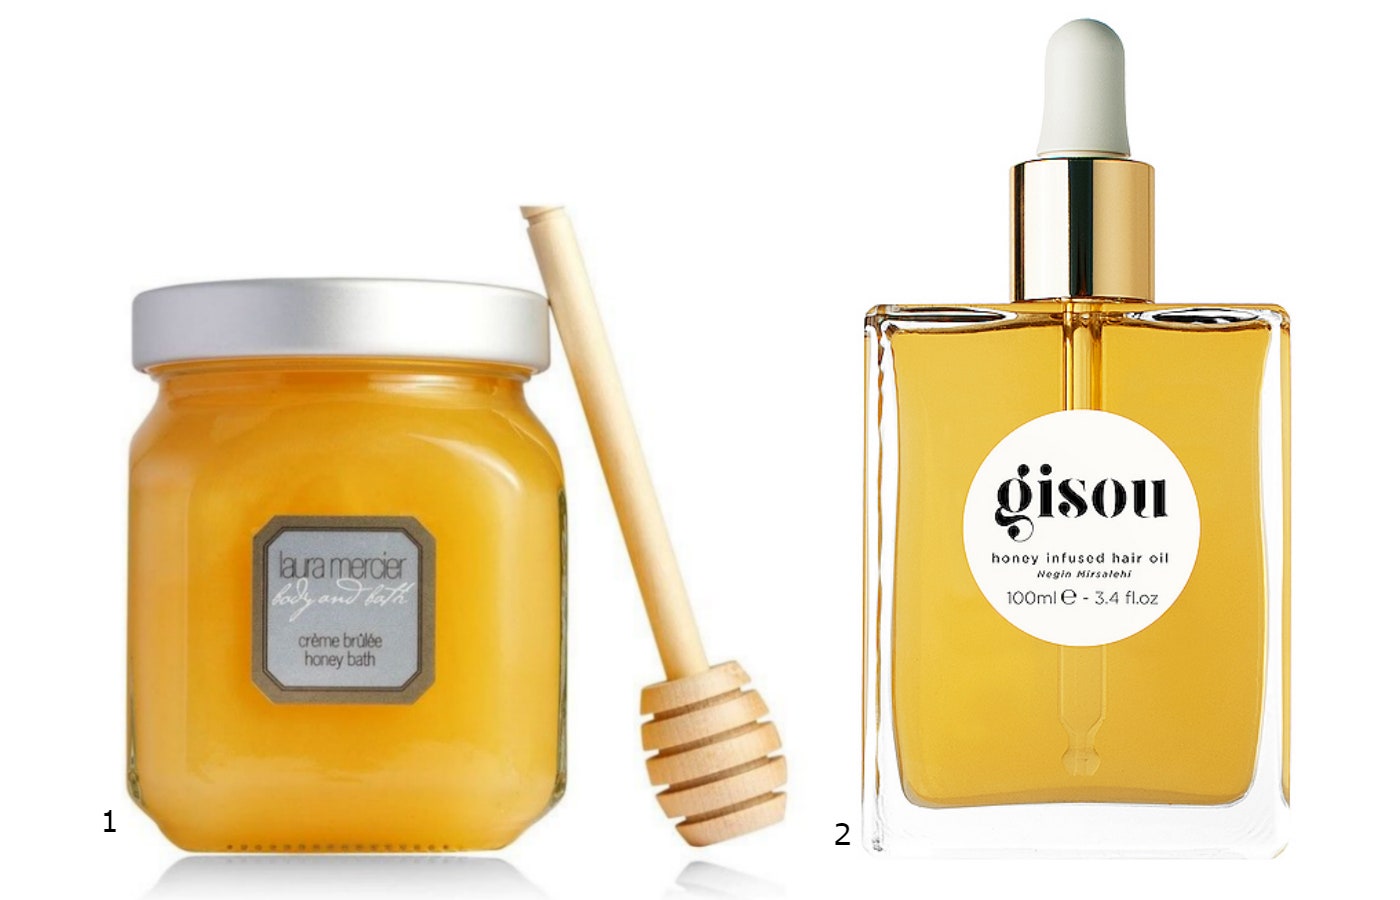 Laura Mercier Crème Brûle Honey Bath 2. Gisou Honey Infused Hair Oil